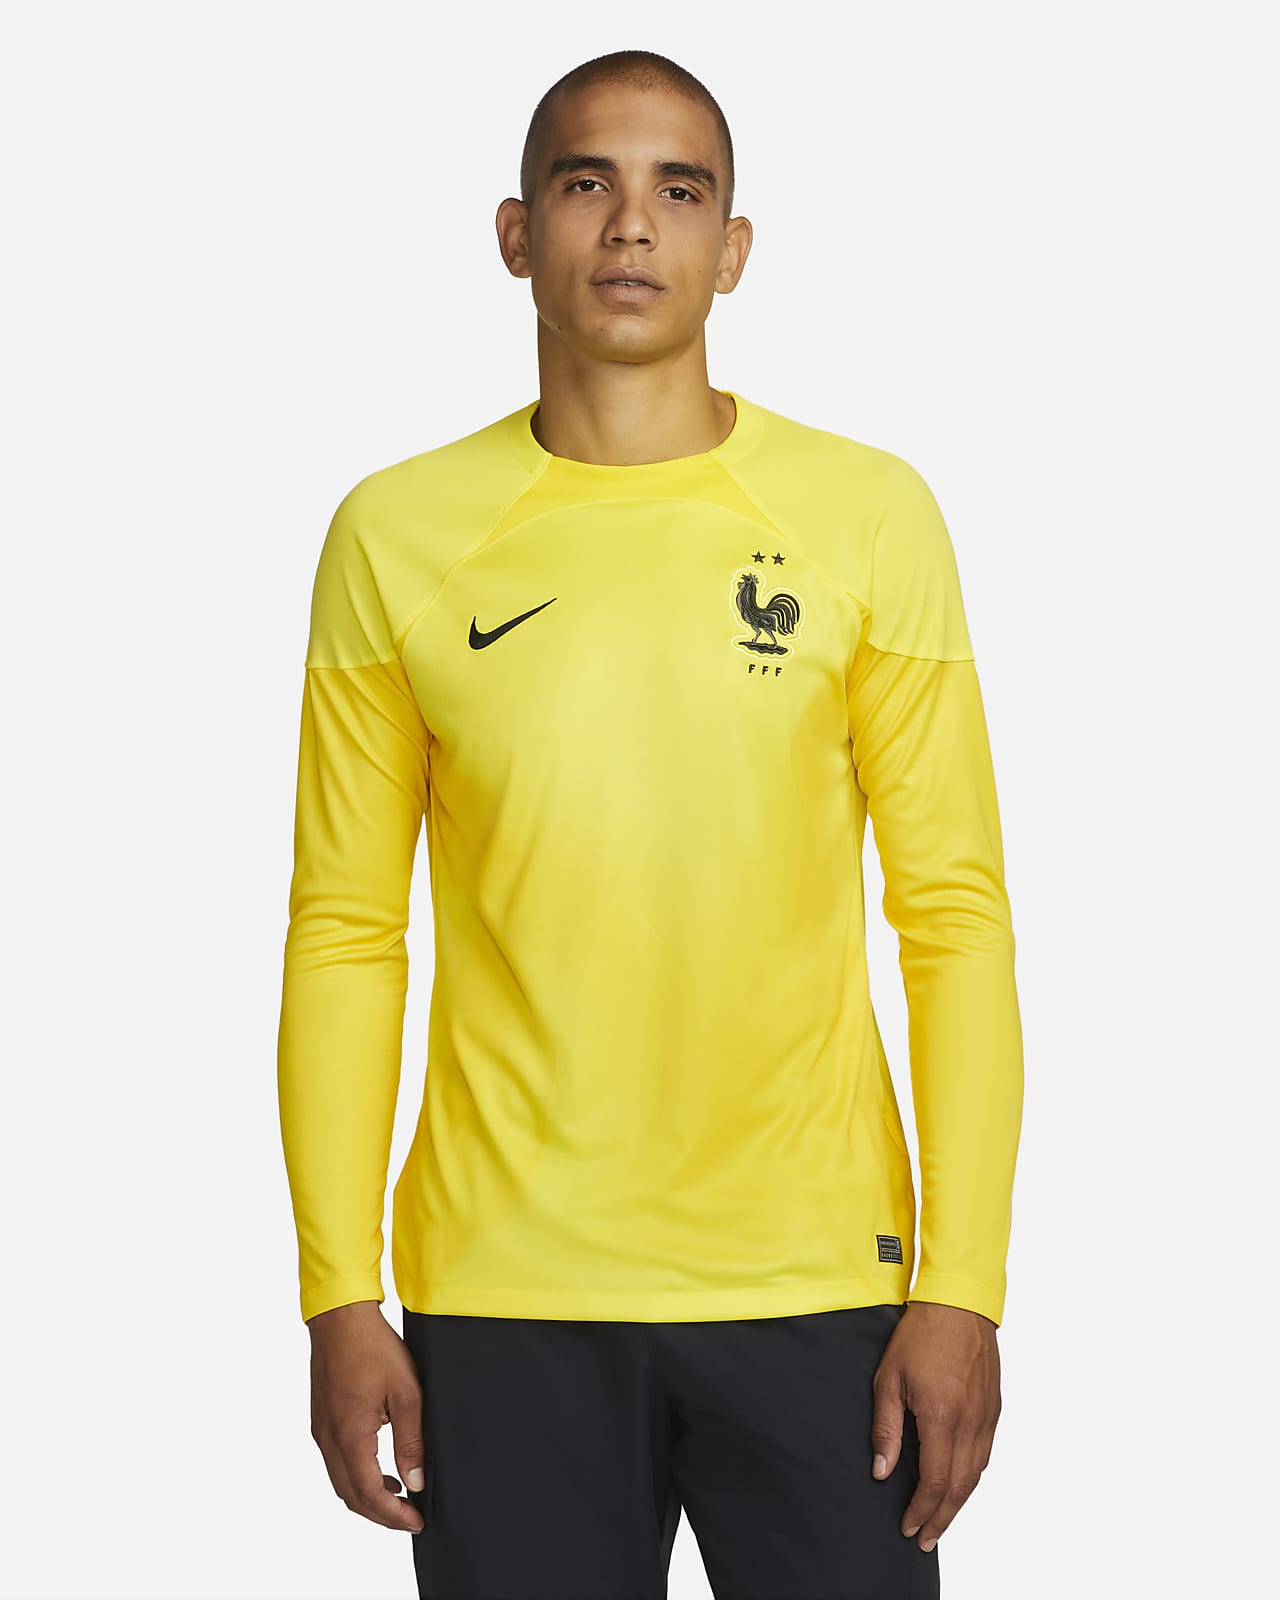 FFF 2022/23 Stadium Goalkeeper Men's Nike Dri-FIT Football Shirt